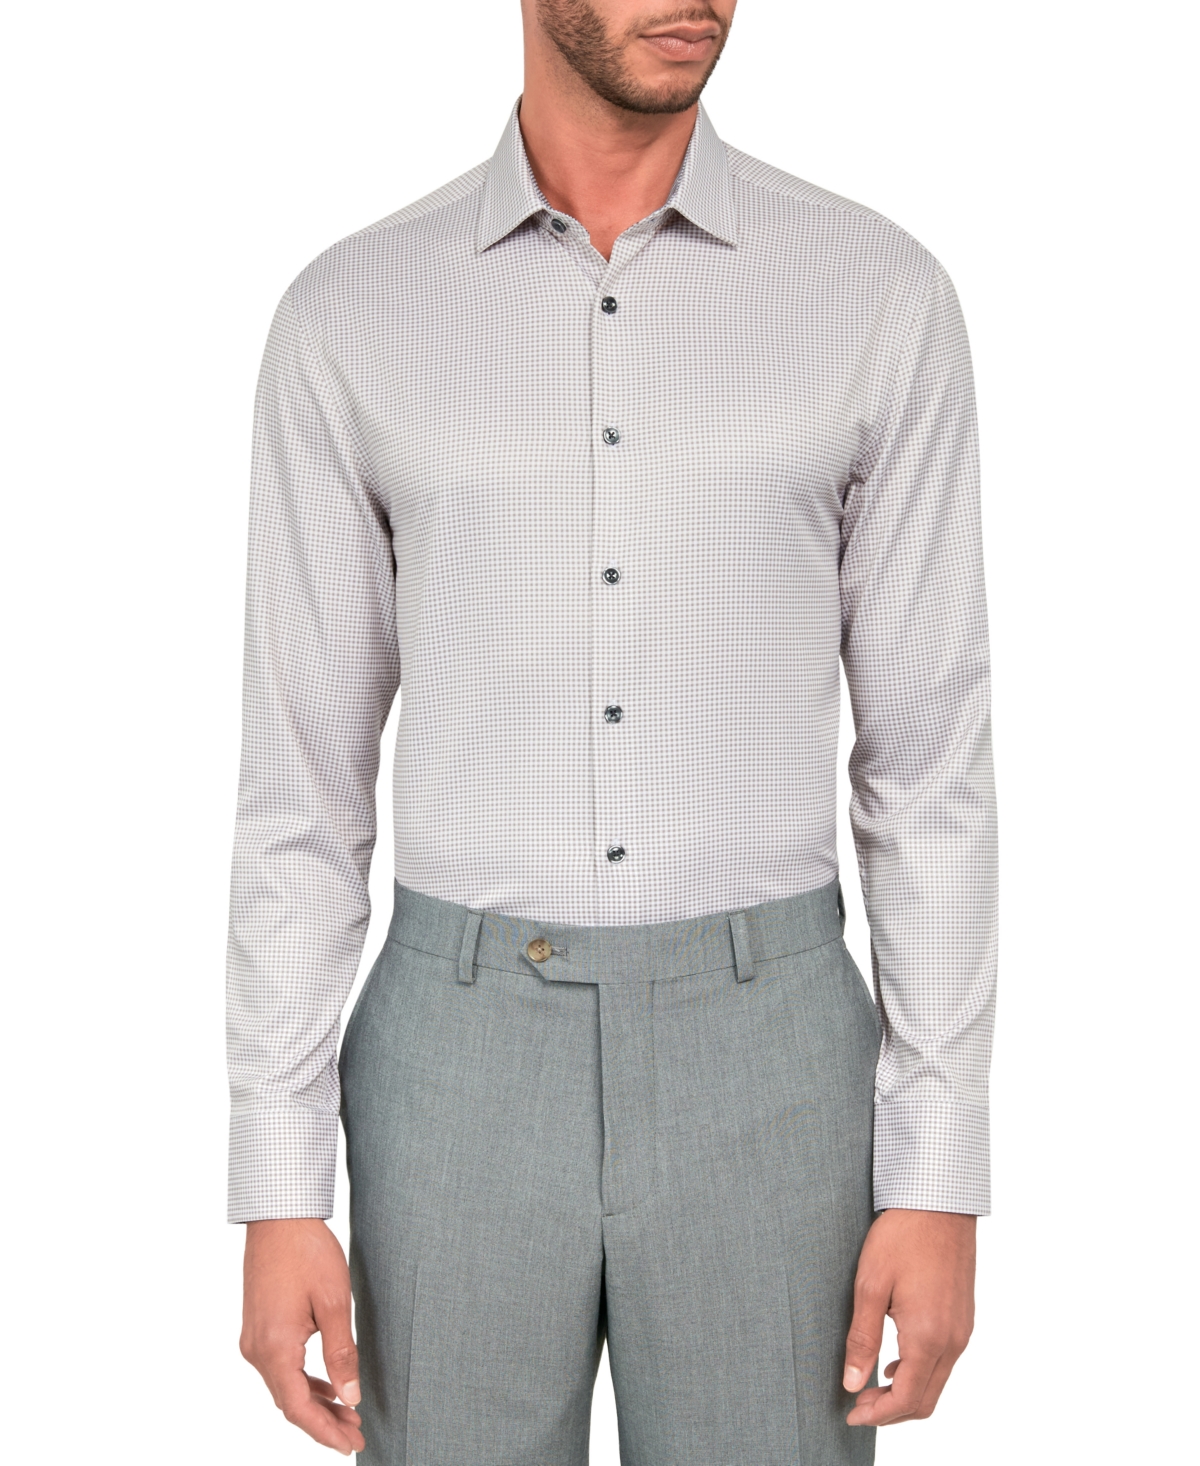 Men's Slim Fit Gingham Performance Stretch Cooling Comfort Dress Shirt - Grey